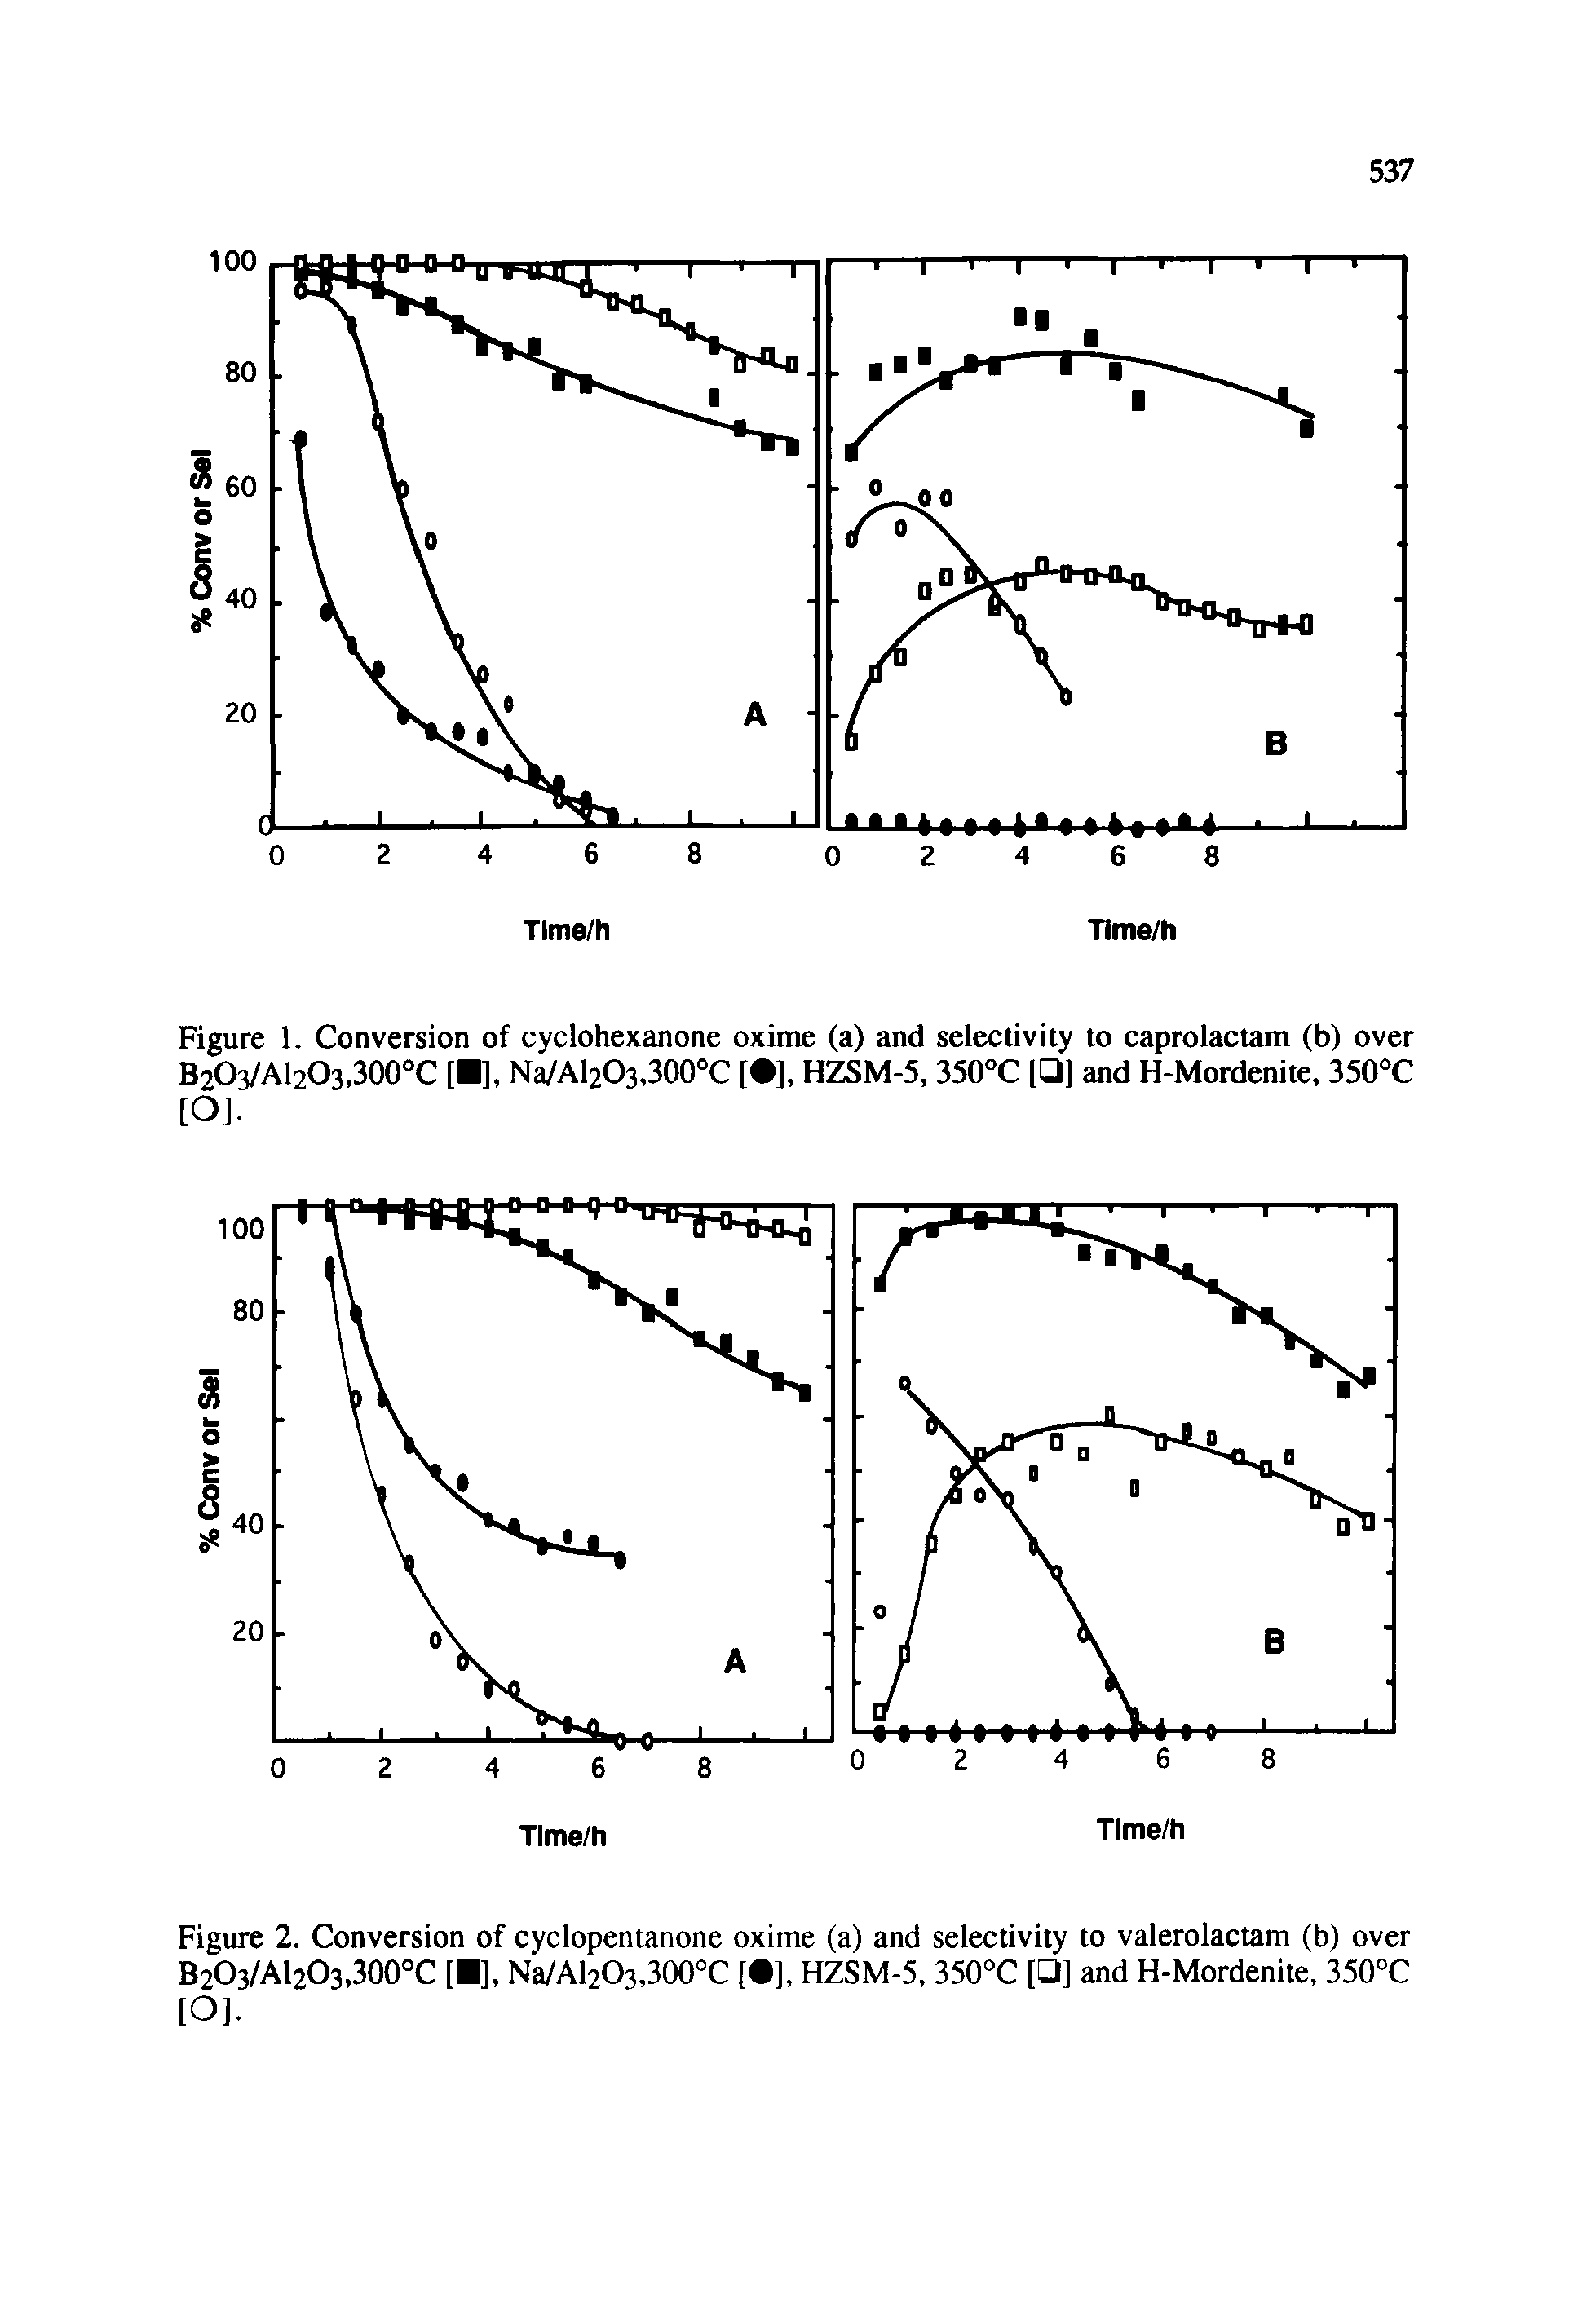 Figure 1. Conversion of cyclohexanone oxime (a) and selectivity to caprolactam (b) over B203/Al203,300°C [ ], Na/Al203,300°C [ ], HZSM-5, 350°C [ ] and H-Mordenite, 350°C [O],...